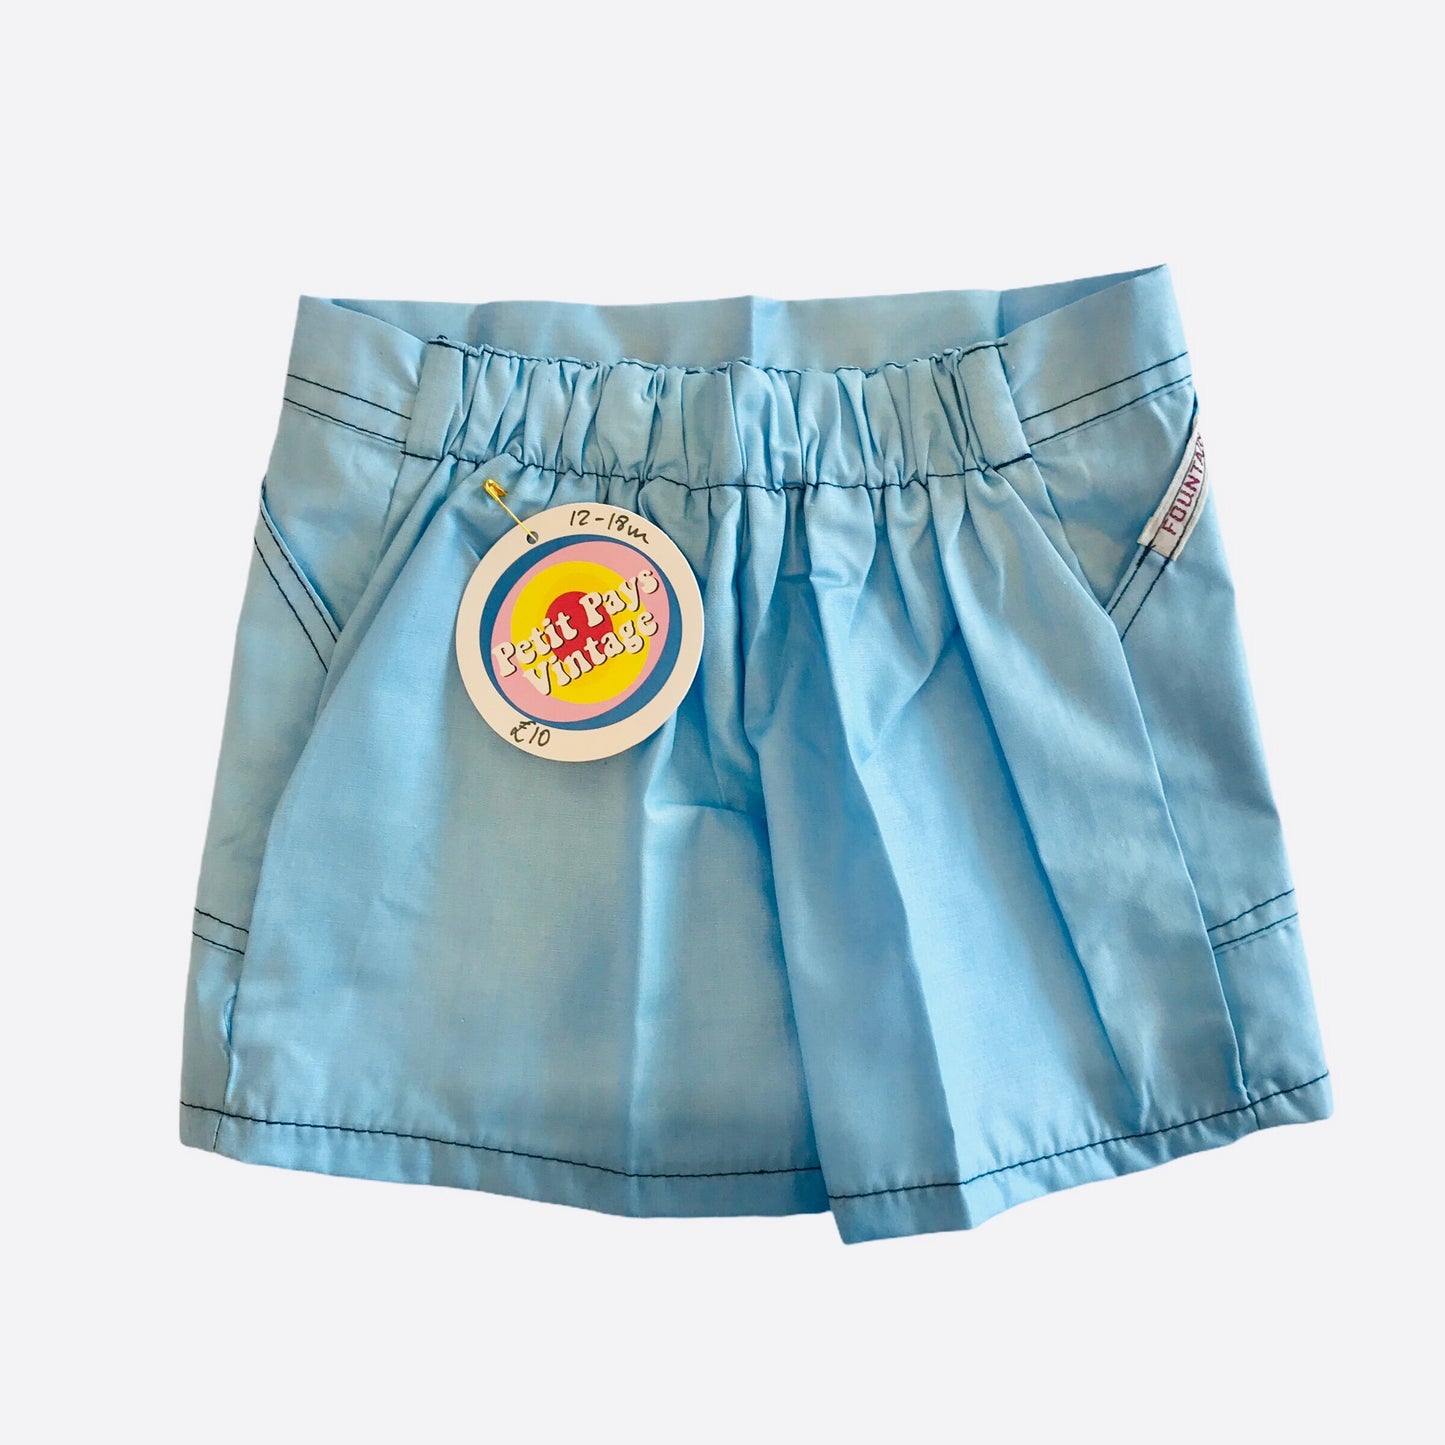 Vintage 1970s Blue Lightweight Shorts 12-18 Months